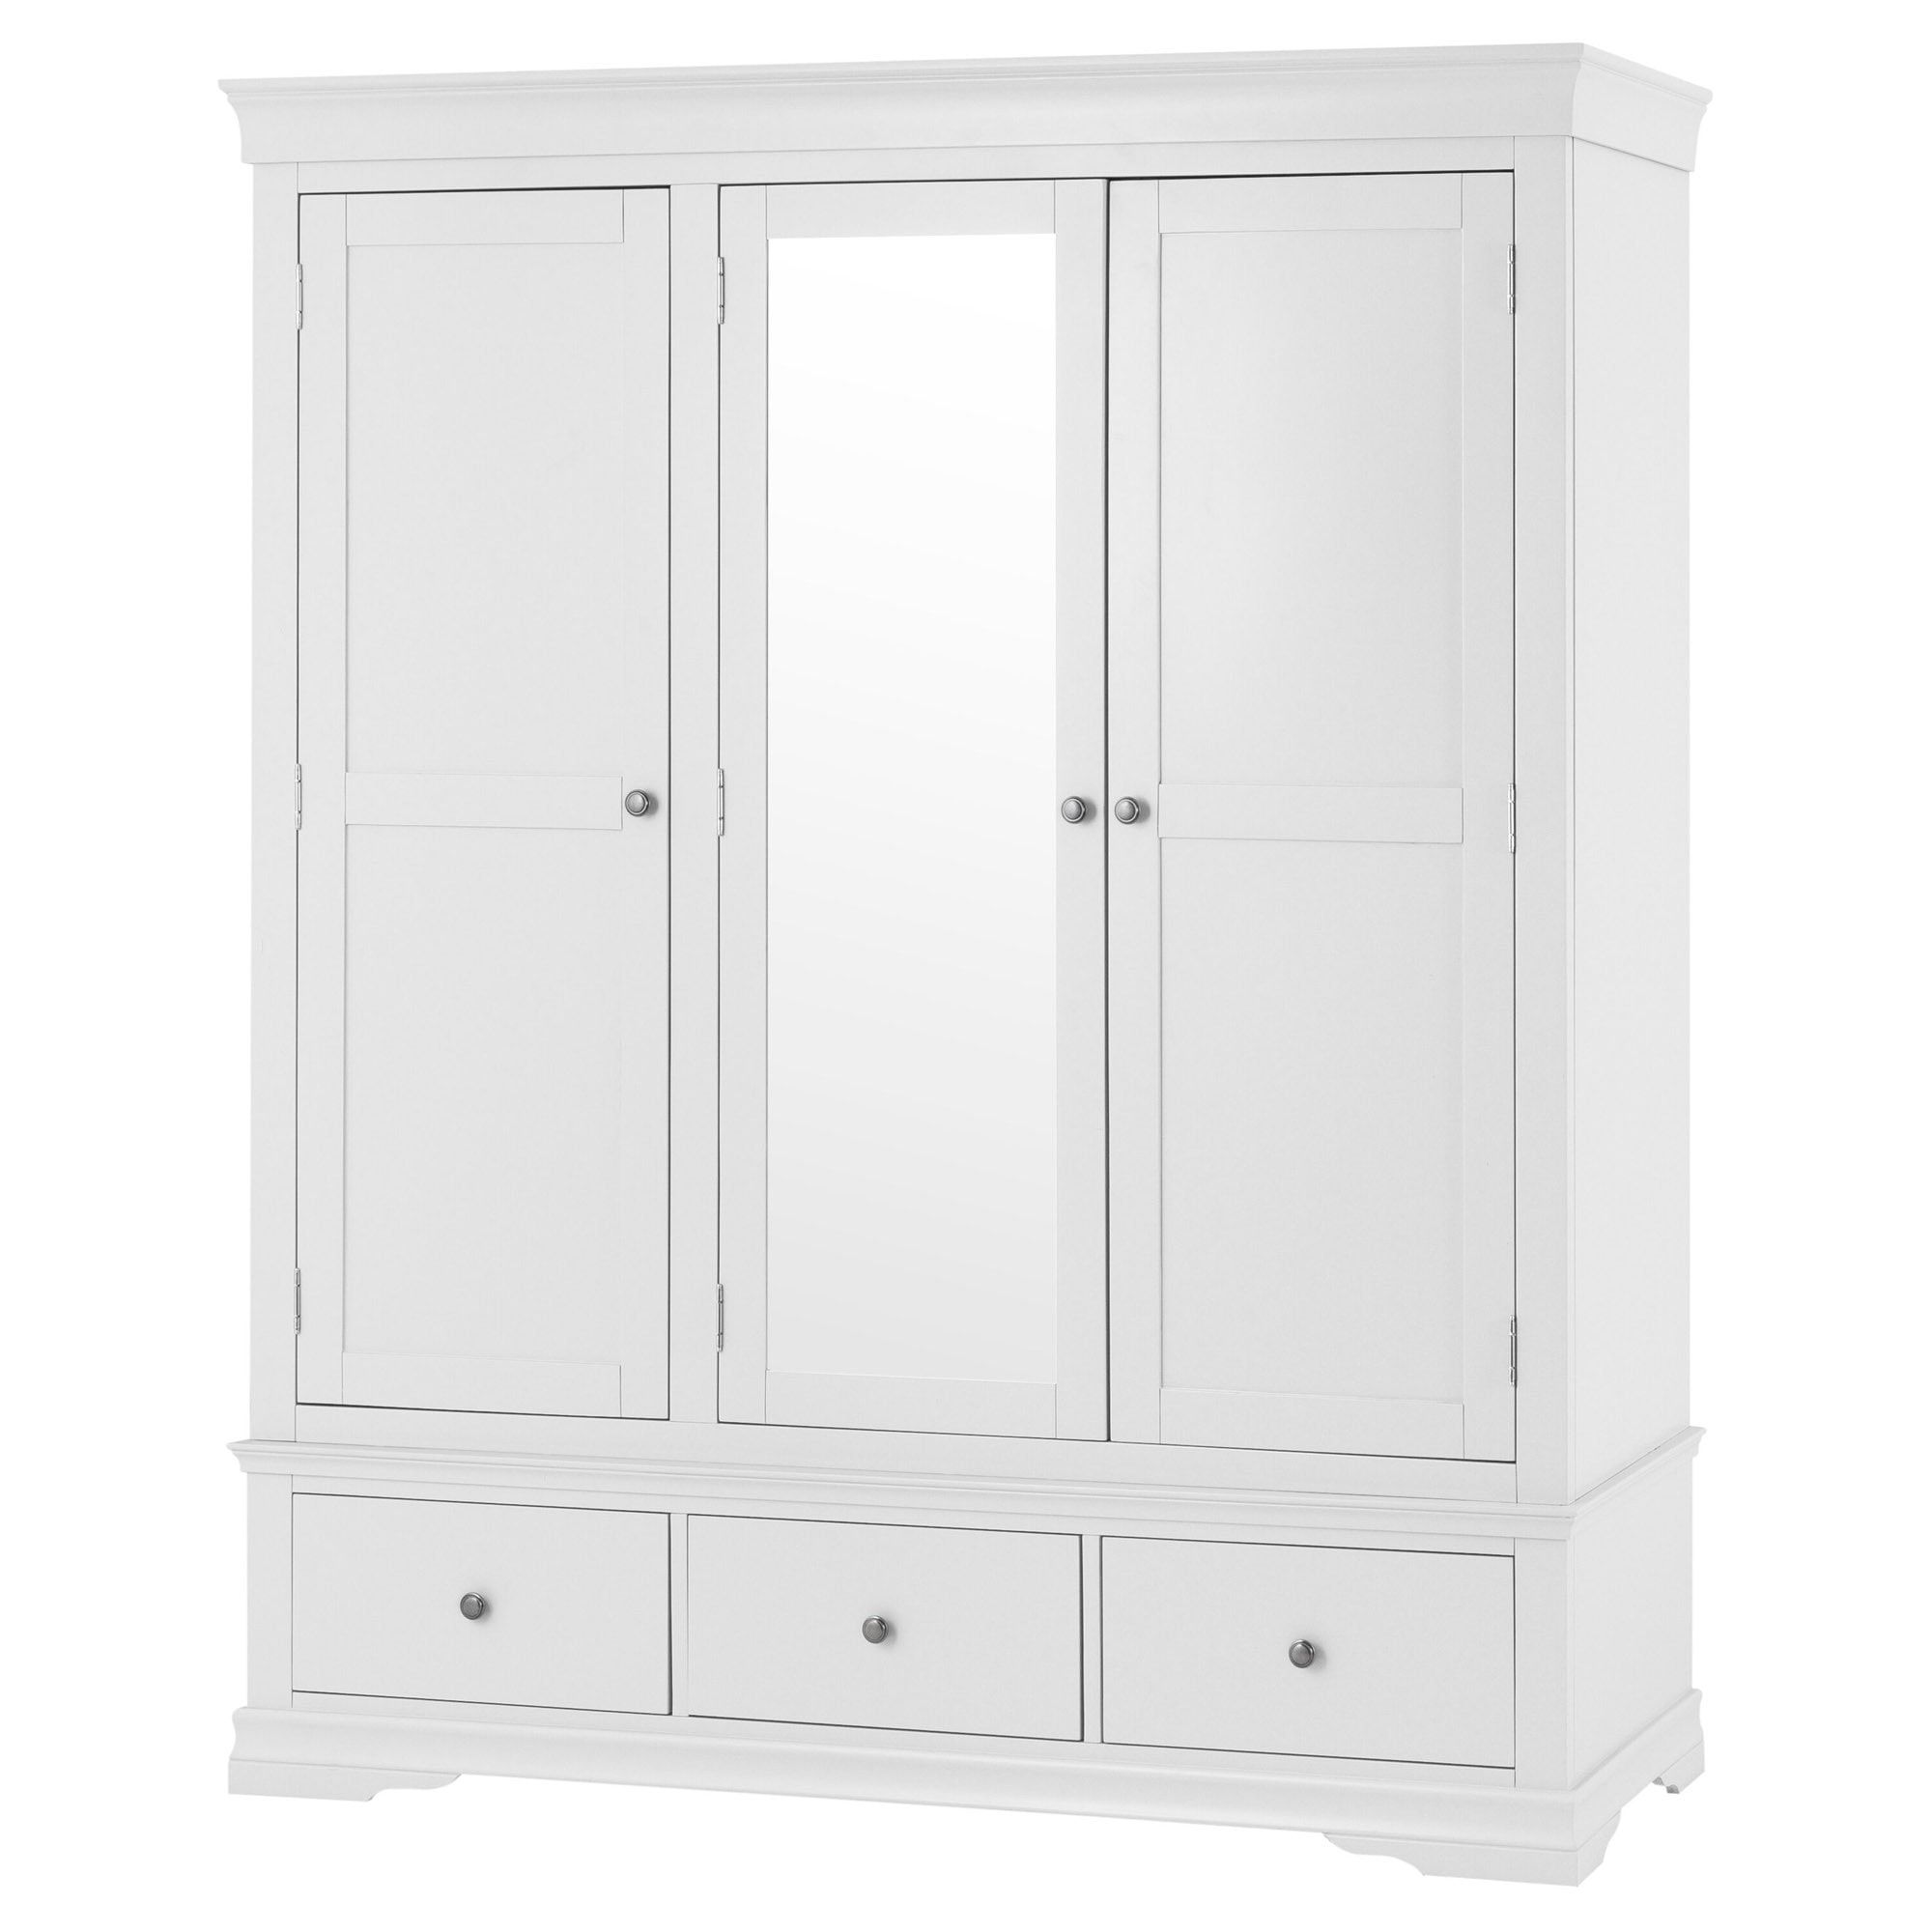 Swindon White 3 Door 3 Drawer Wardrobe | White Wardrobe | White Wooden  Wardrobe Within White 3 Door Wardrobes (Gallery 1 of 20)